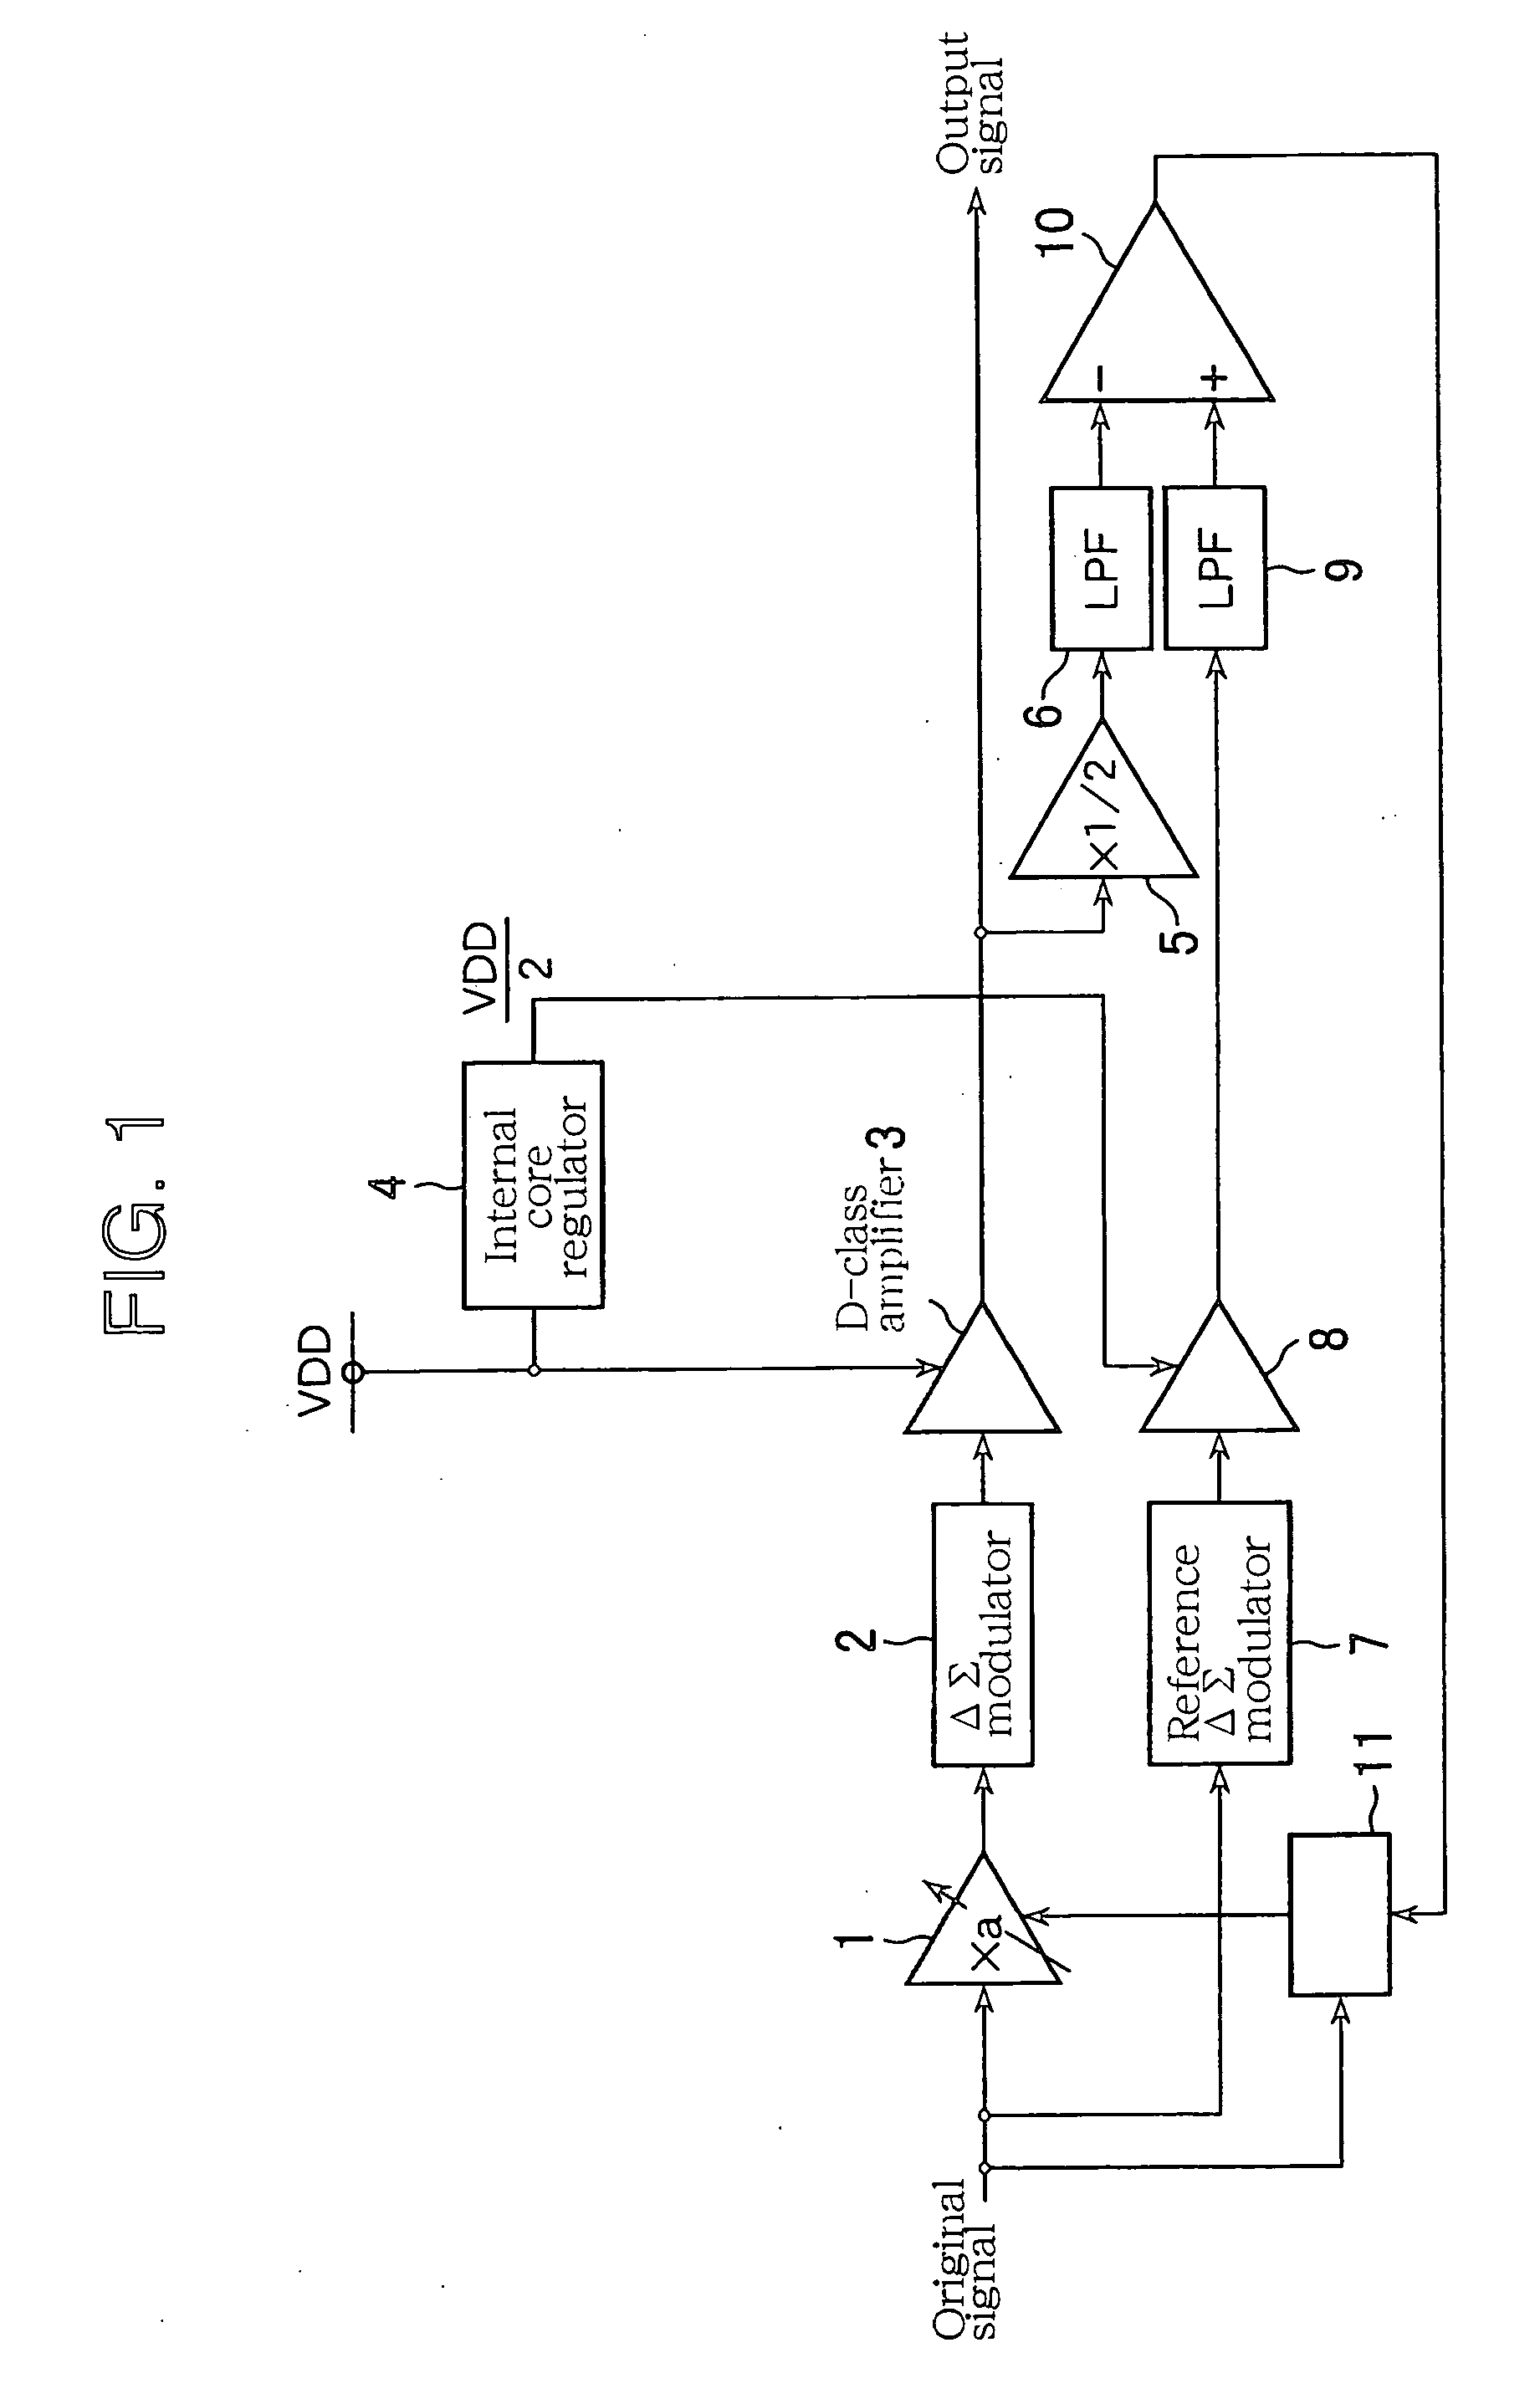 D-class signal amplification circuit